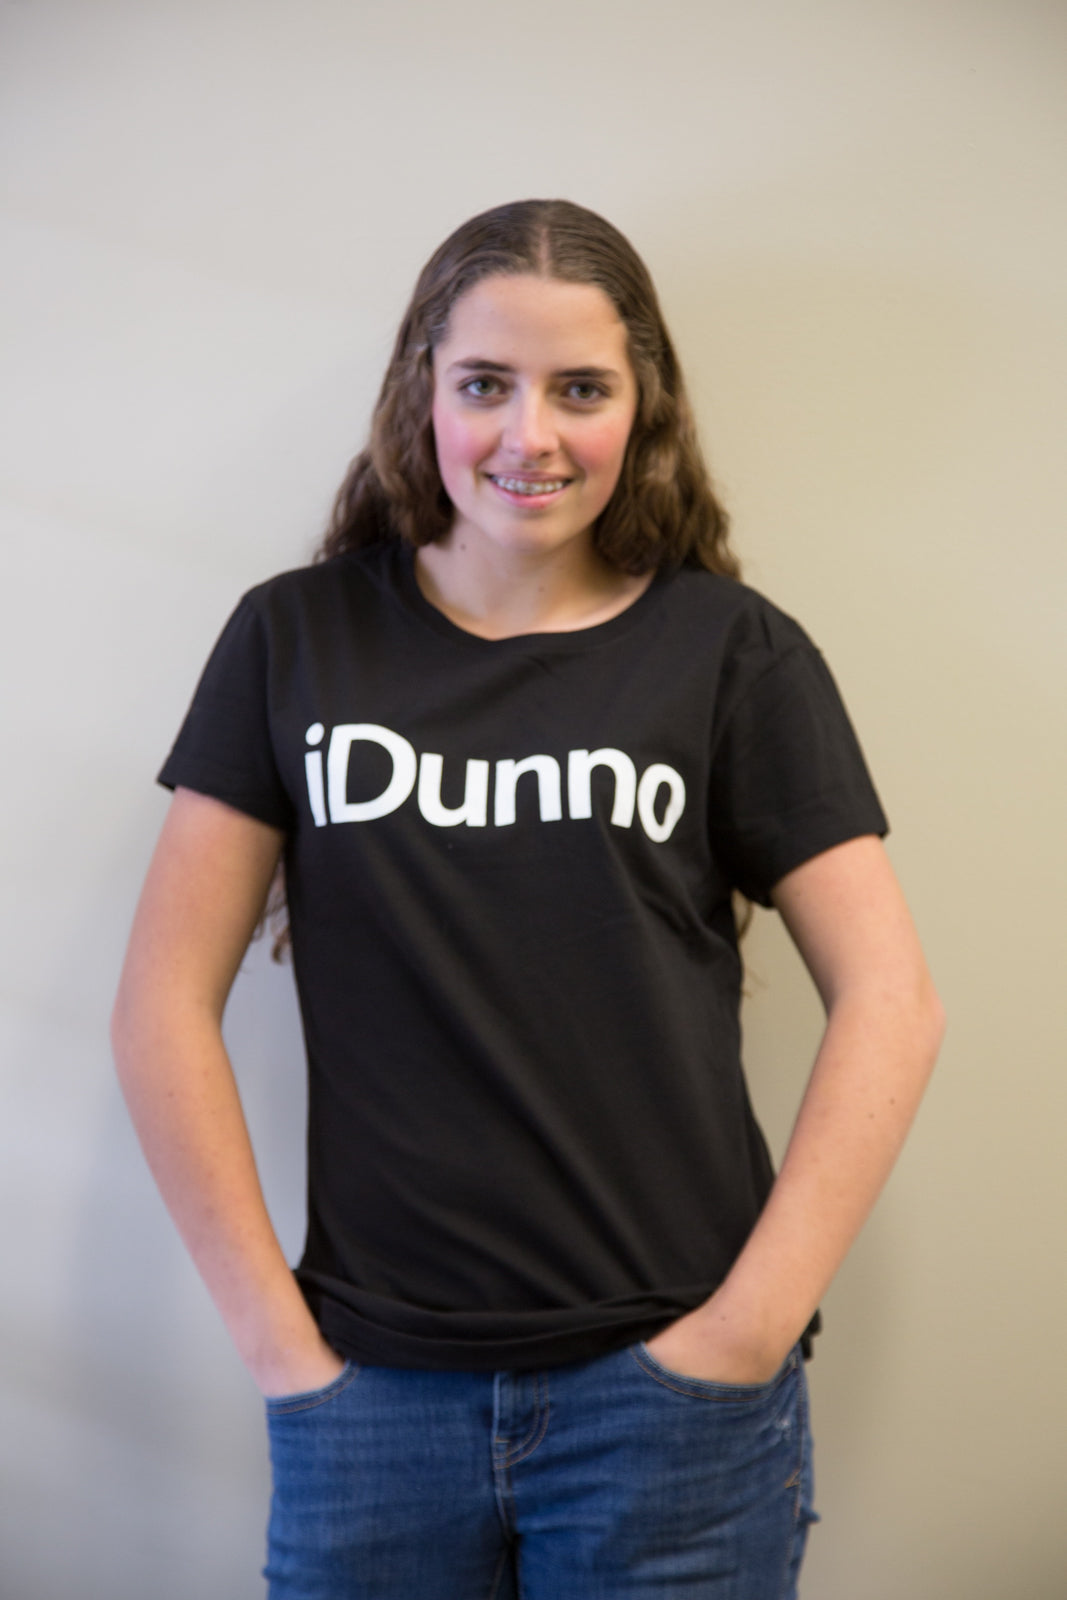 iDunno, Black Powerup T-Shirt (Mens and Ladies cuts)